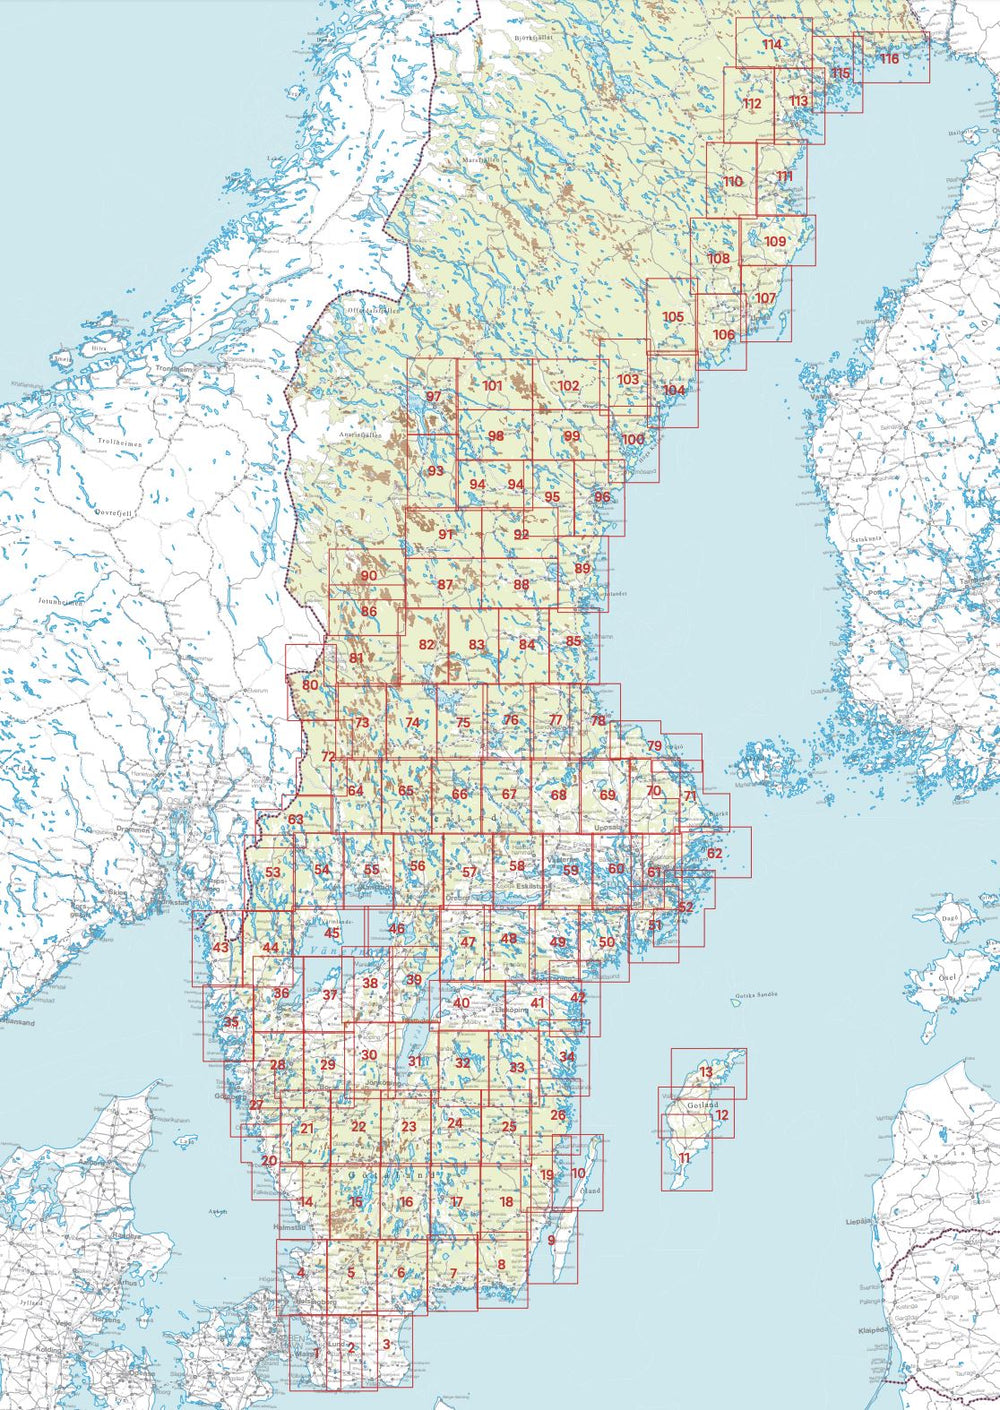 Carte topographique n° 70 - Gimo (Suède) | Norstedts - Sverigeserien carte pliée Norstedts 